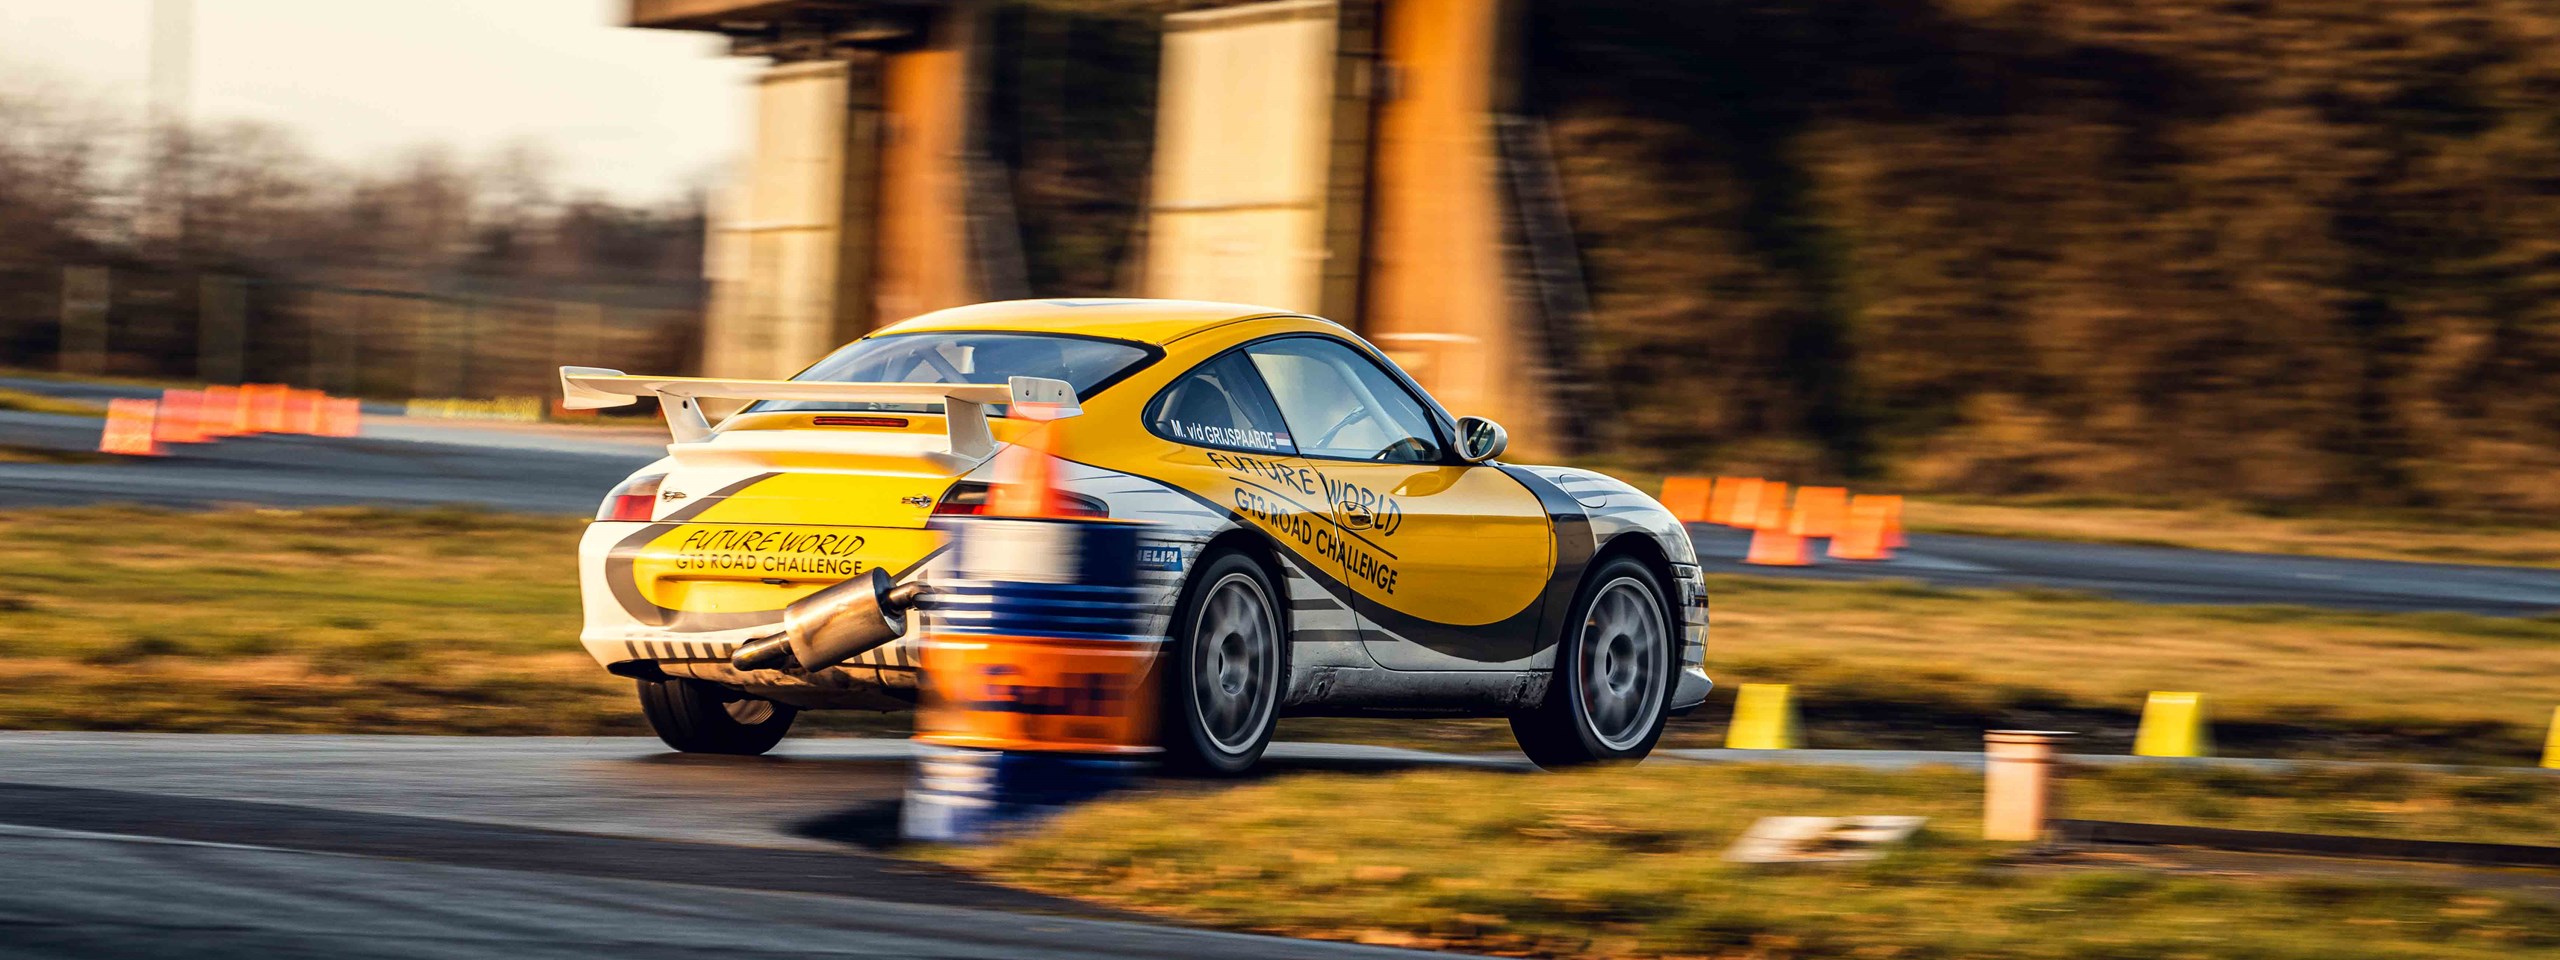 Rallytraining 1 Weeze - Porsche